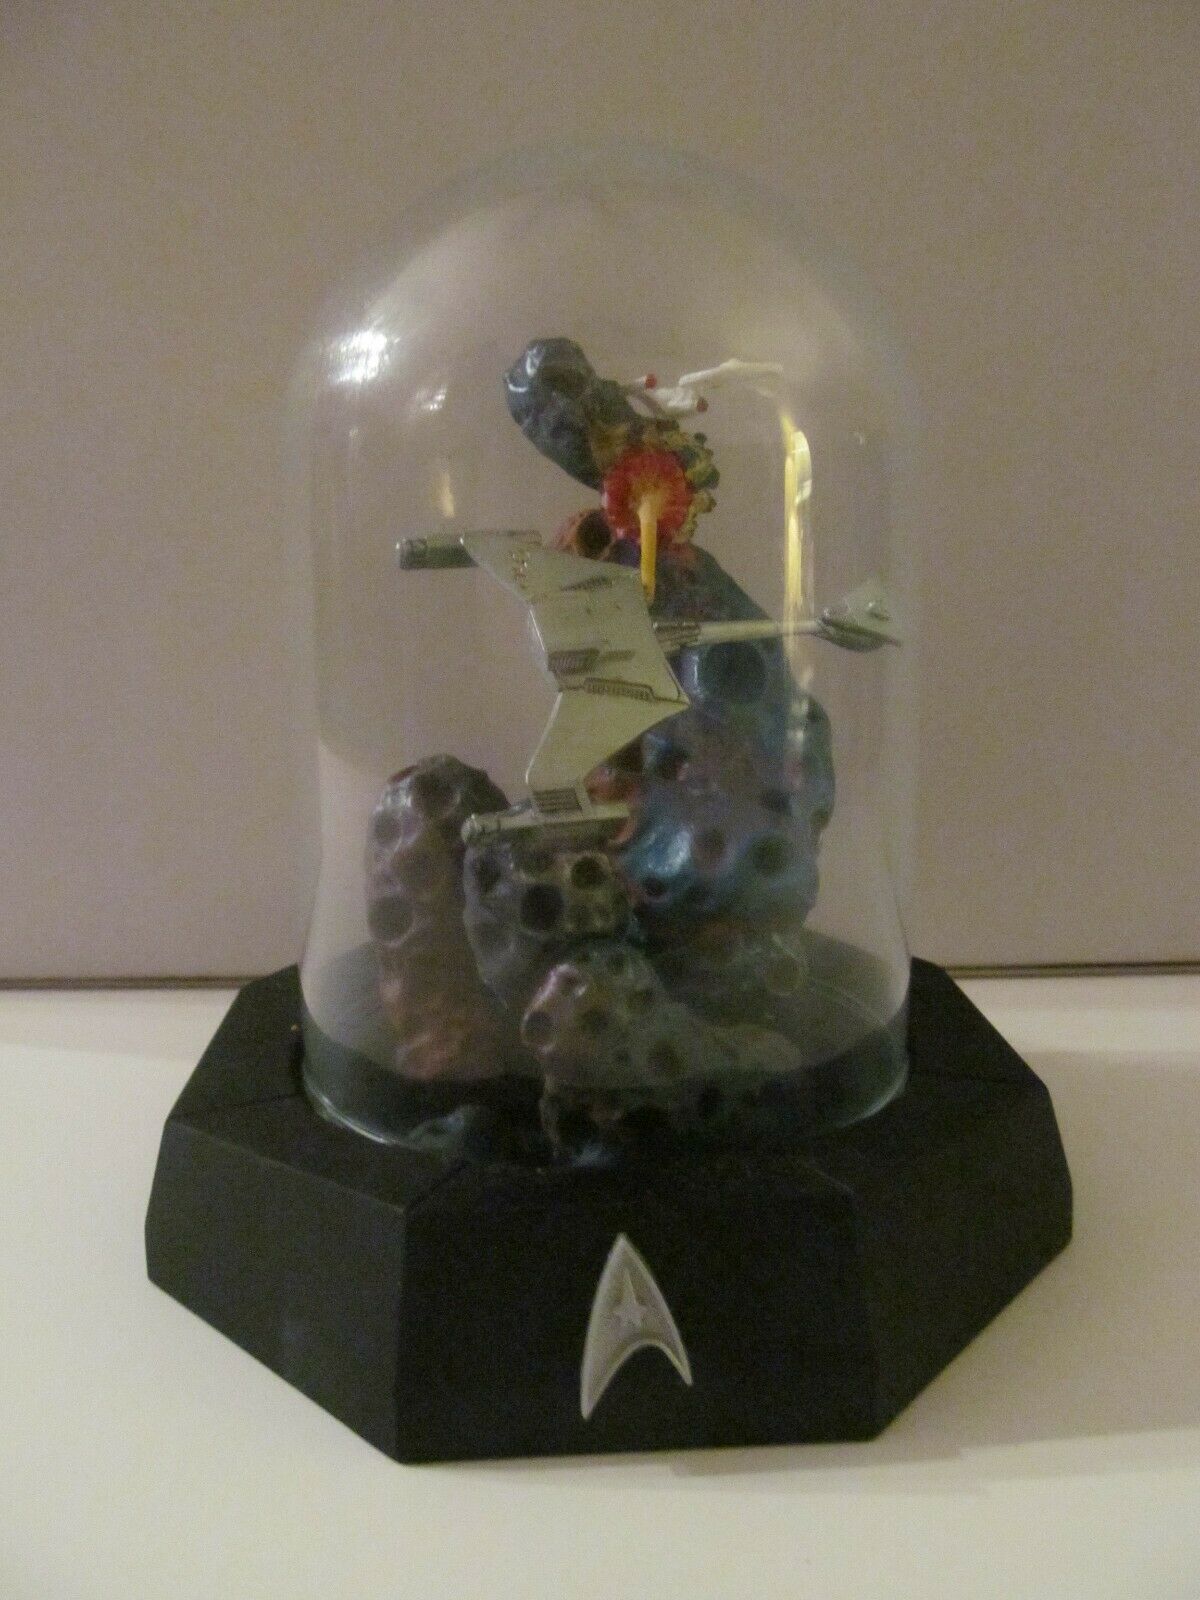 Franklin Mint - Star Trek Miniature Sculpture In Glass Dome - Klingon Encounter